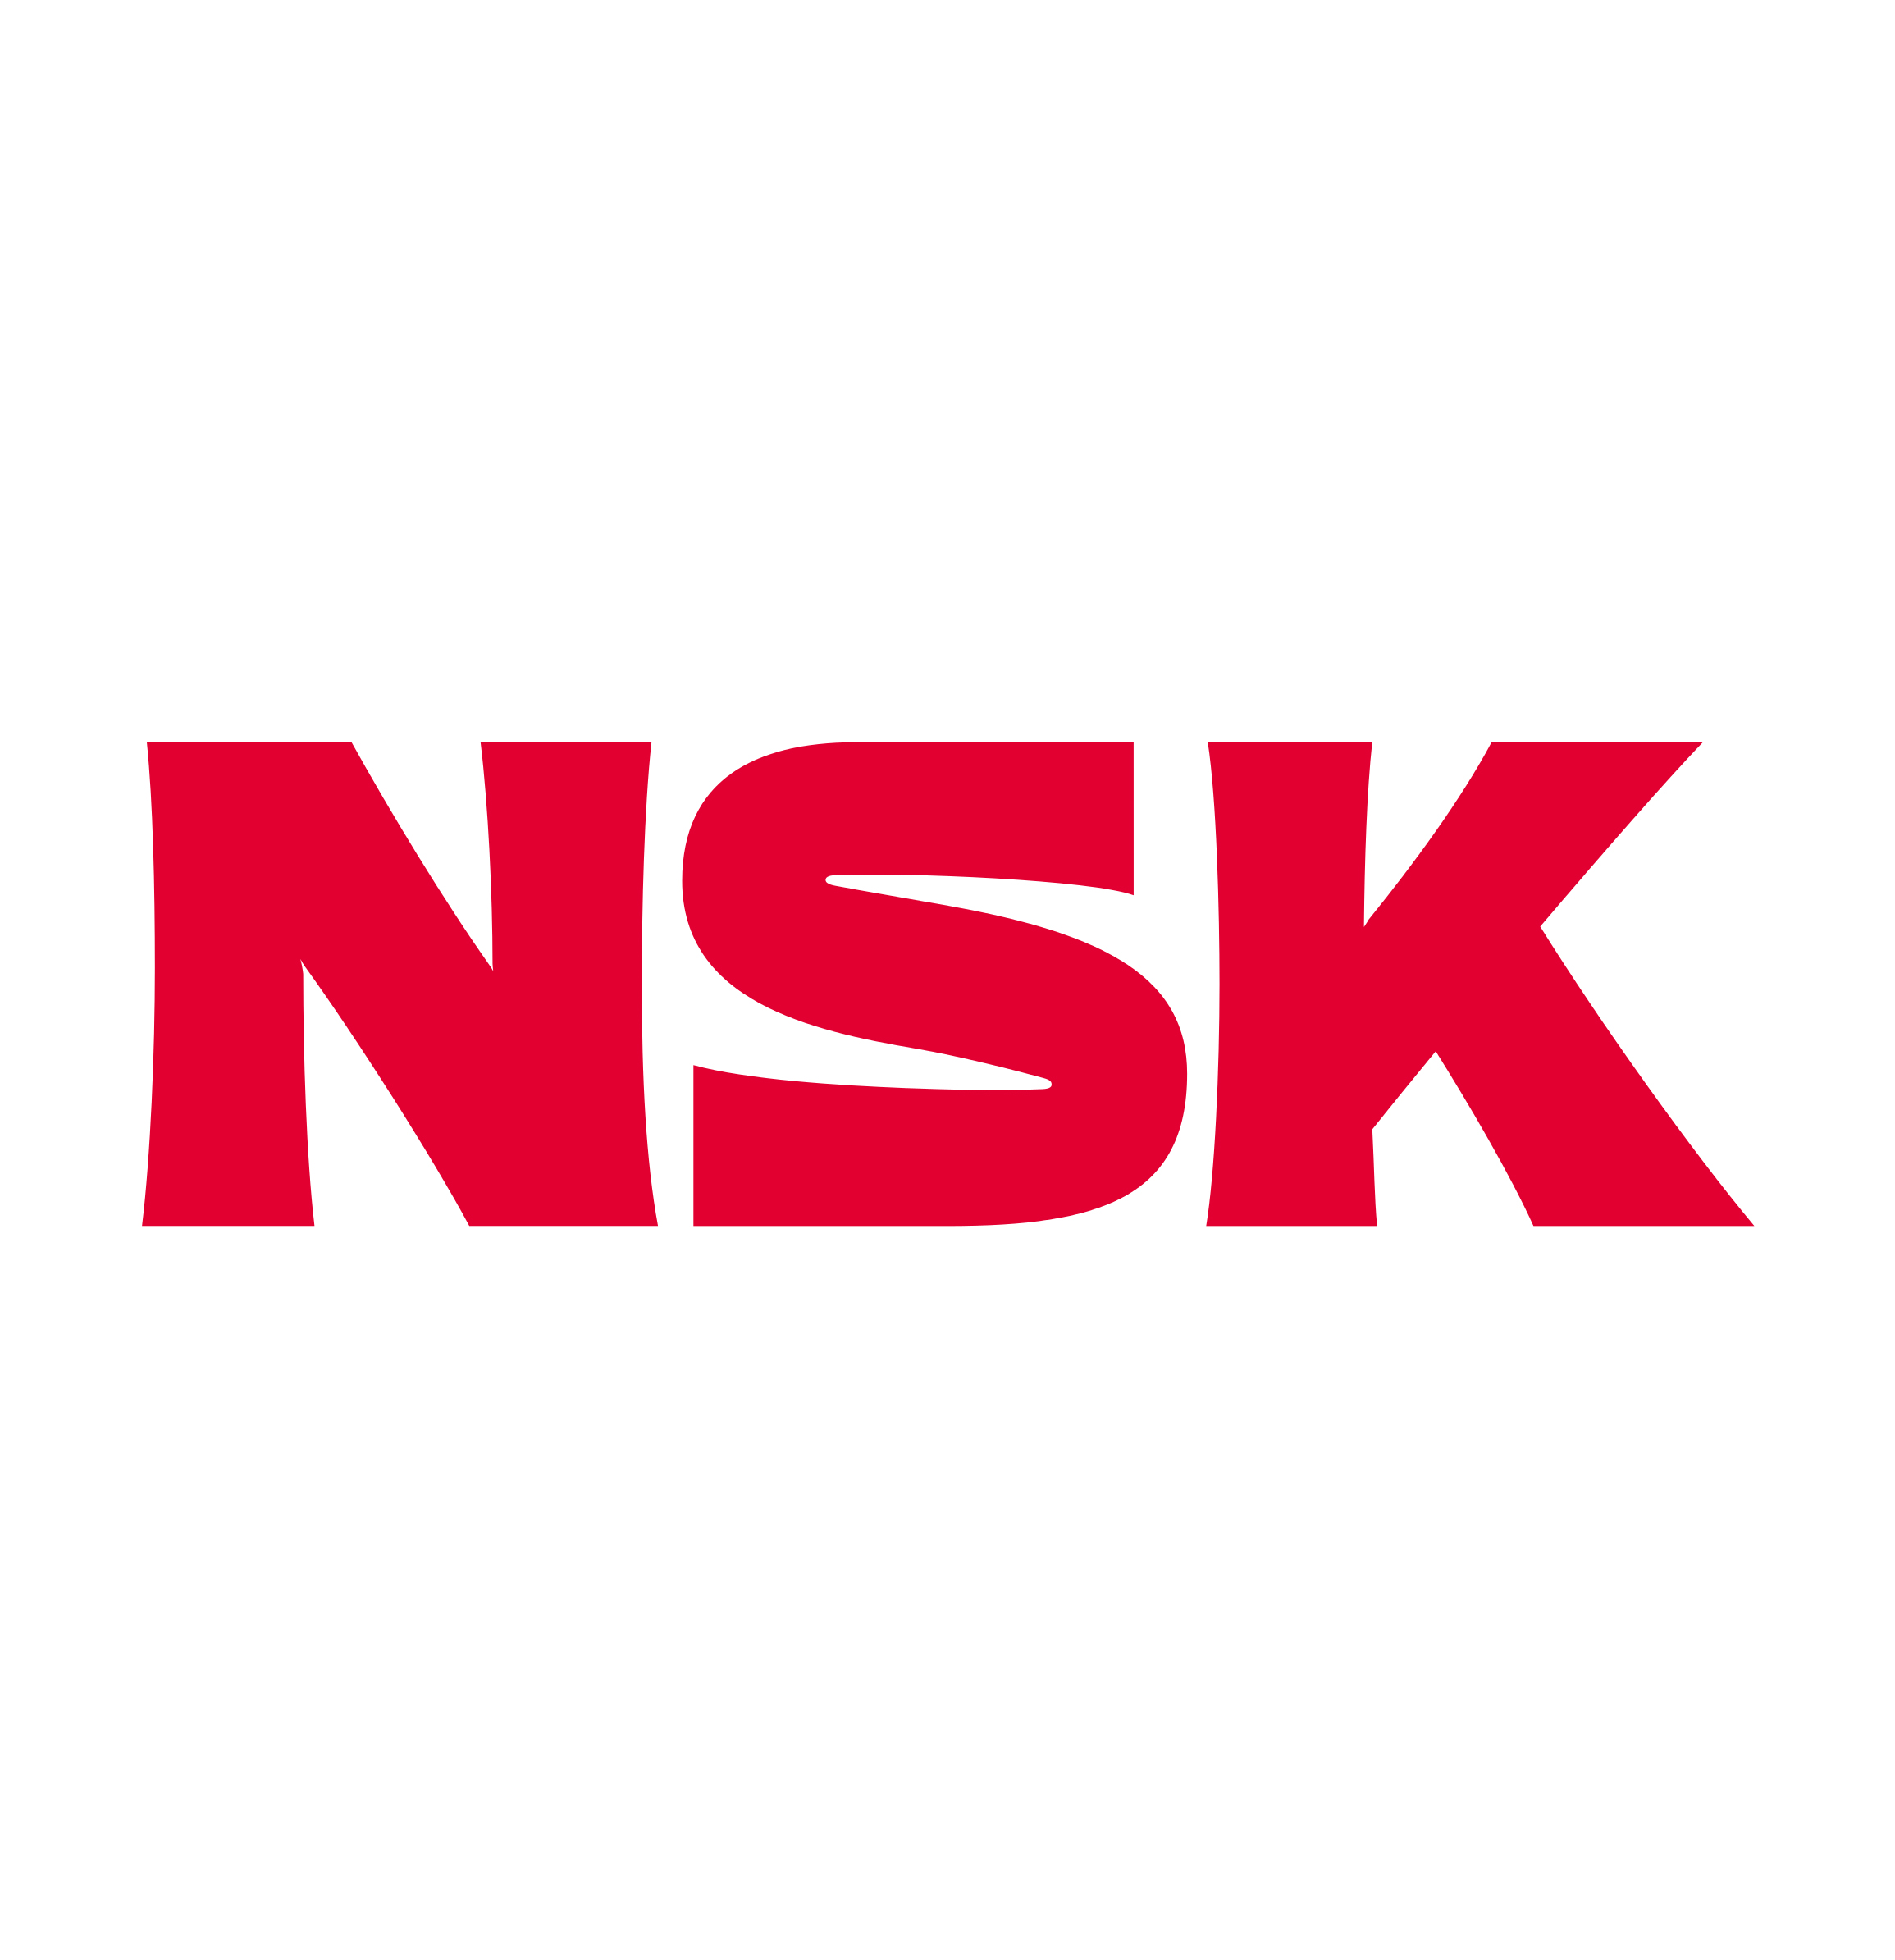 Nsk страна. NSK логотип. Логотипы производителей автозапчастей. NSK подшипники логотип. Бренды производителей автозапчастей.